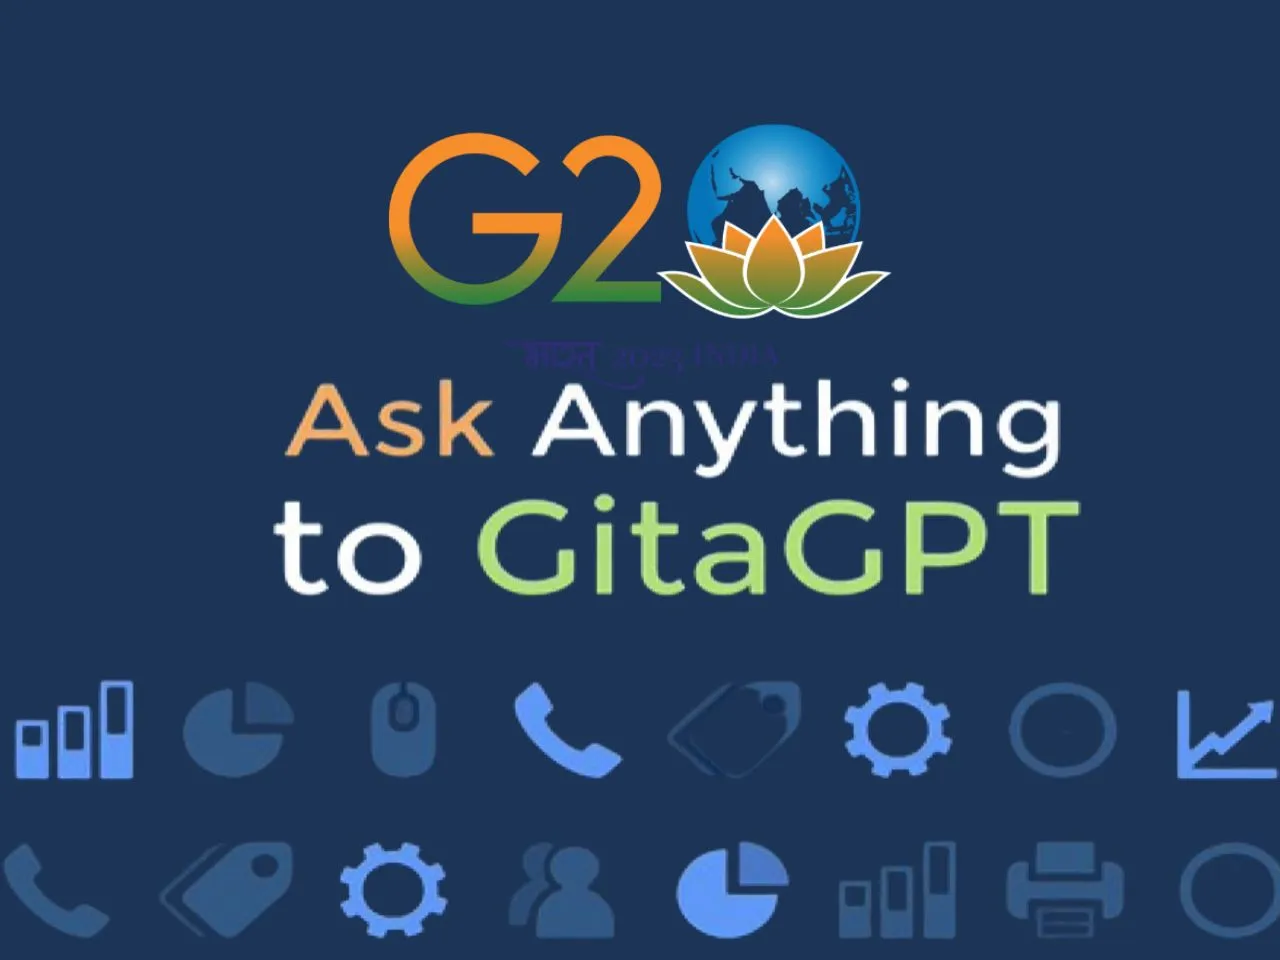 What is GitaGPT at G20 Bridging AI and Spiritual Wisdom